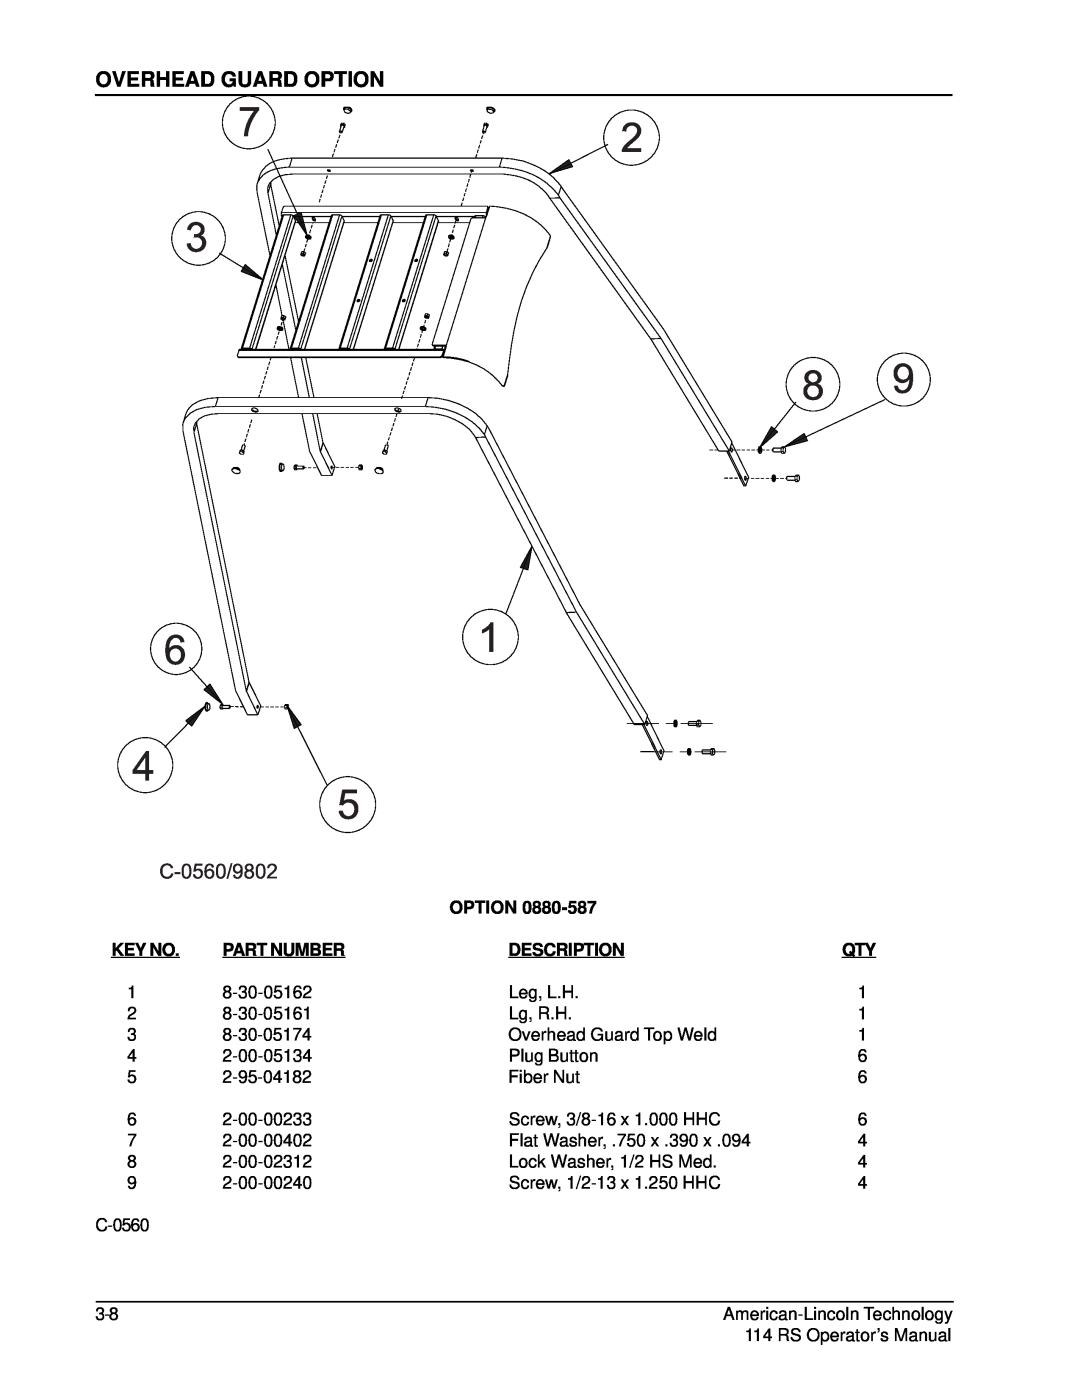 Nilfisk-ALTO 114RS SWEEPER manual 72 3 8, Overhead Guard Option, Part Number, Description 